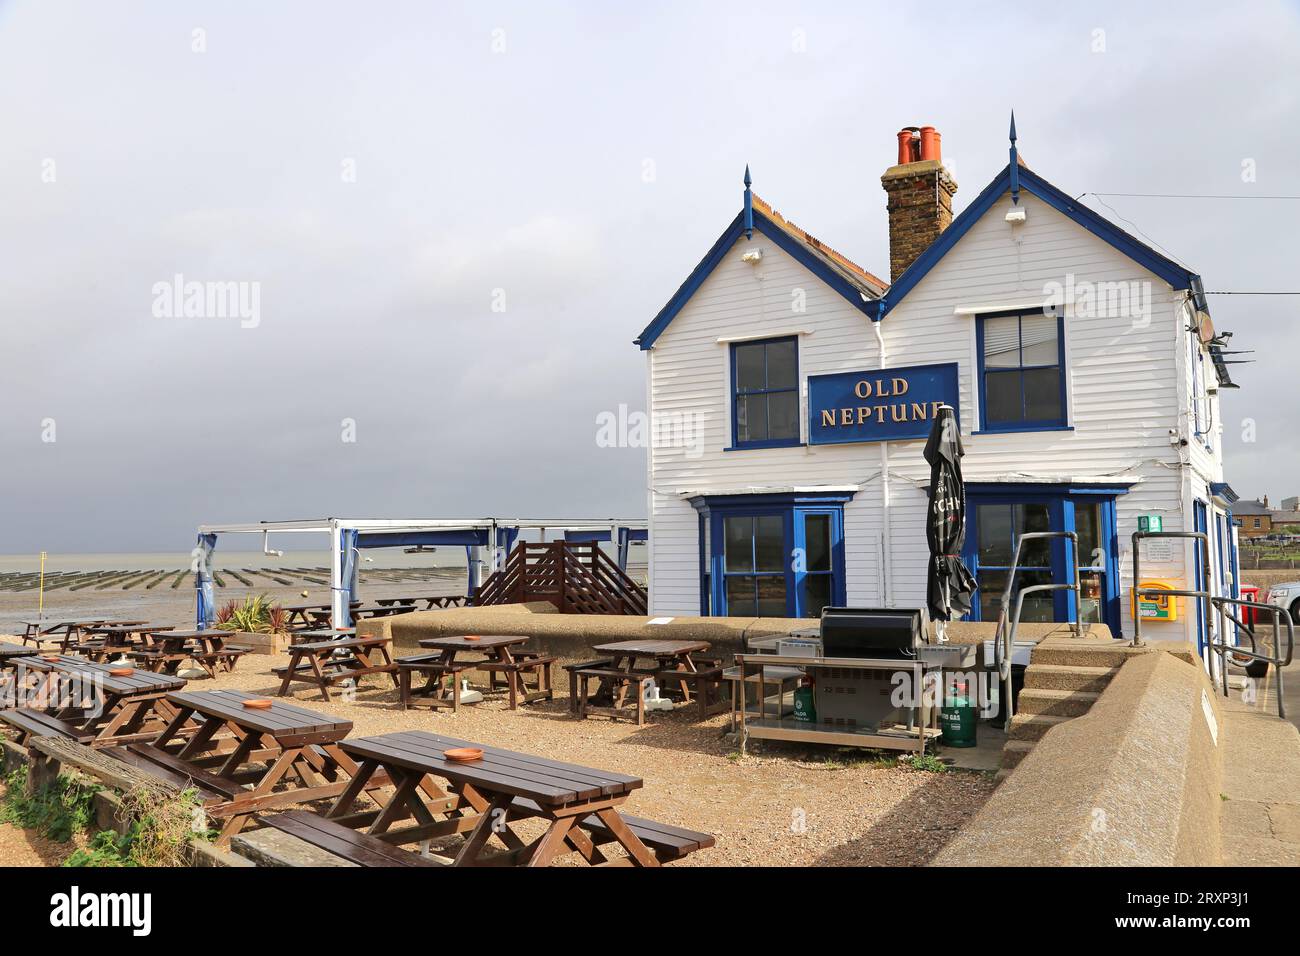 Old Neptune pub, Marine Terrace, Island Wall, Whitstable, Kent, Angleterre, Grande-Bretagne, Royaume-Uni, Royaume-Uni, Europe Banque D'Images